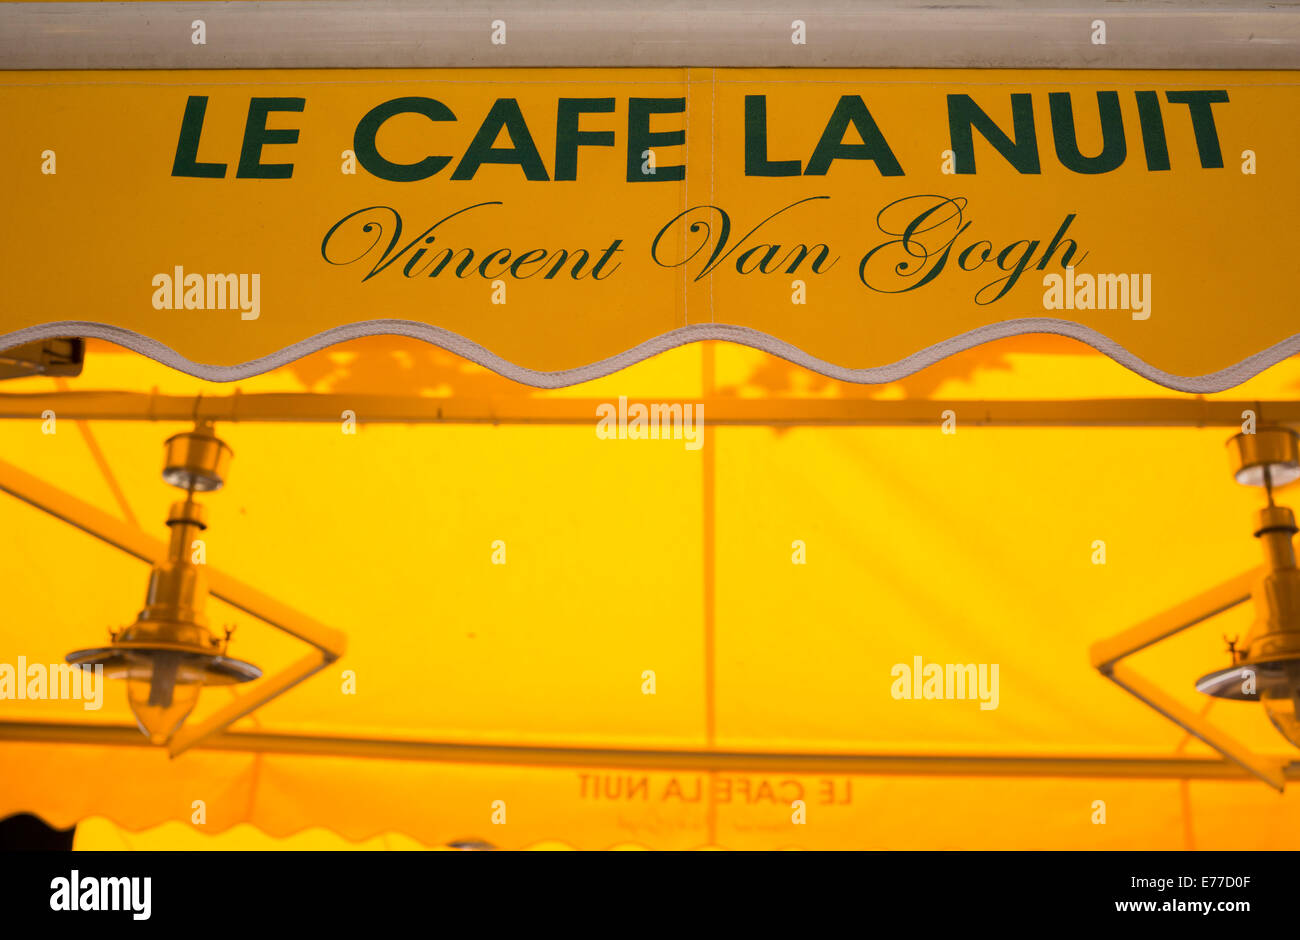 Cafe la Nuit in Arles France Stock Photo